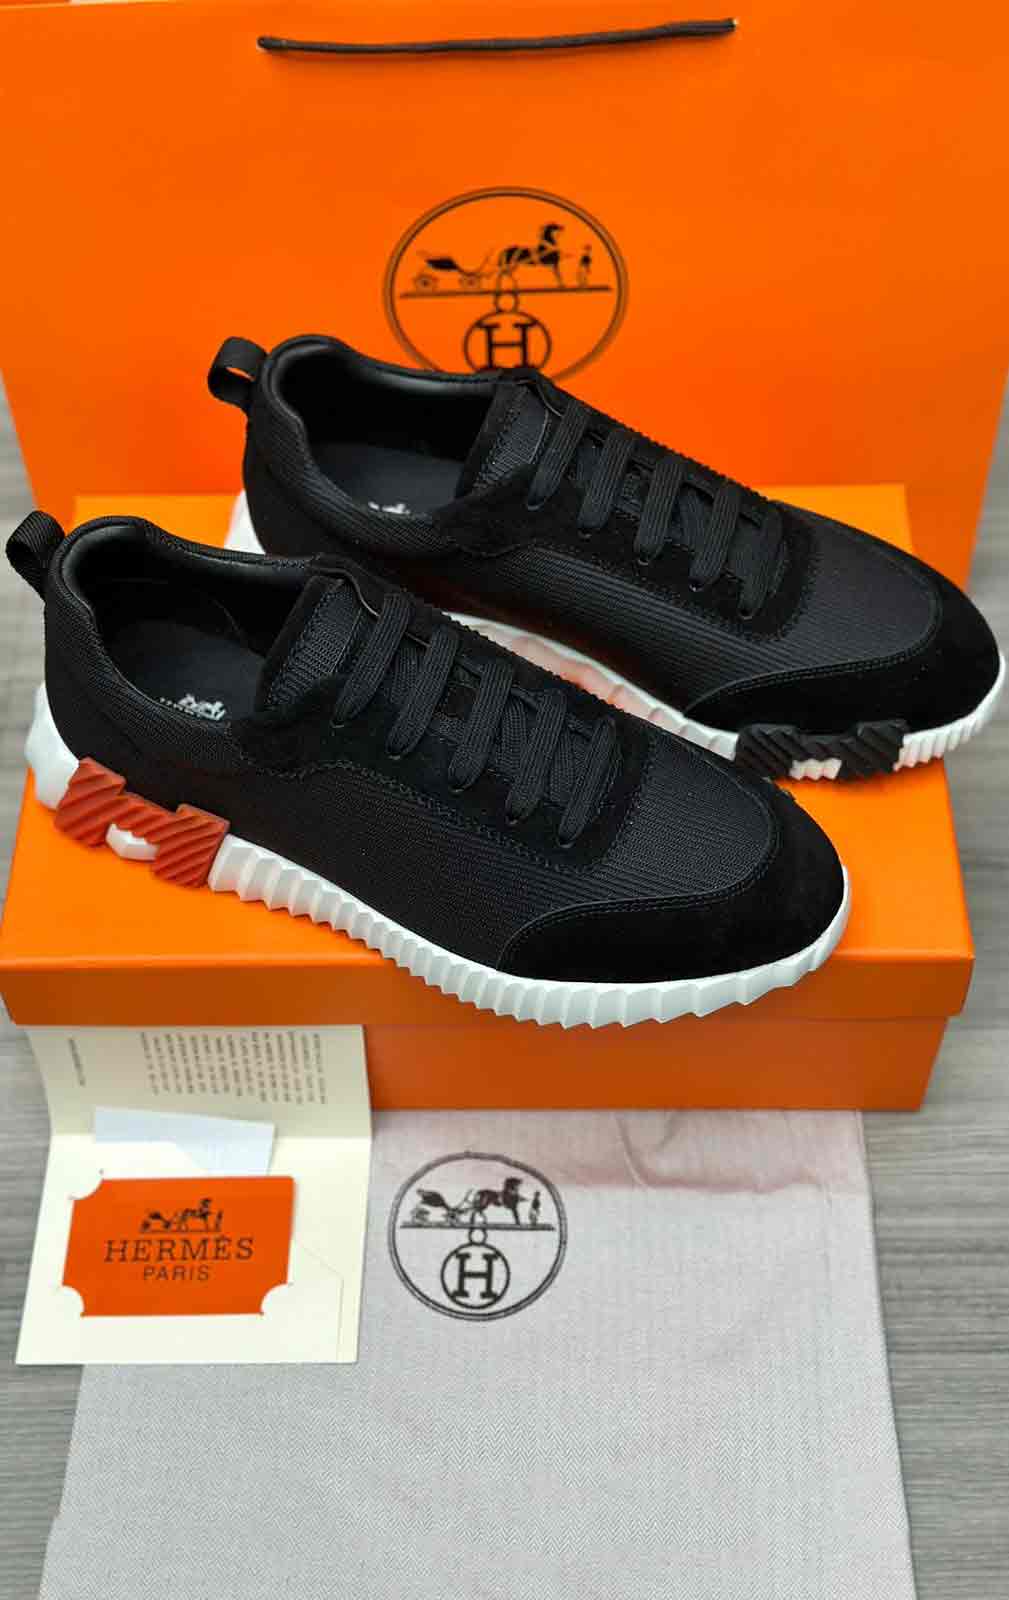 Sneaker Shoes White Black Orange Leather